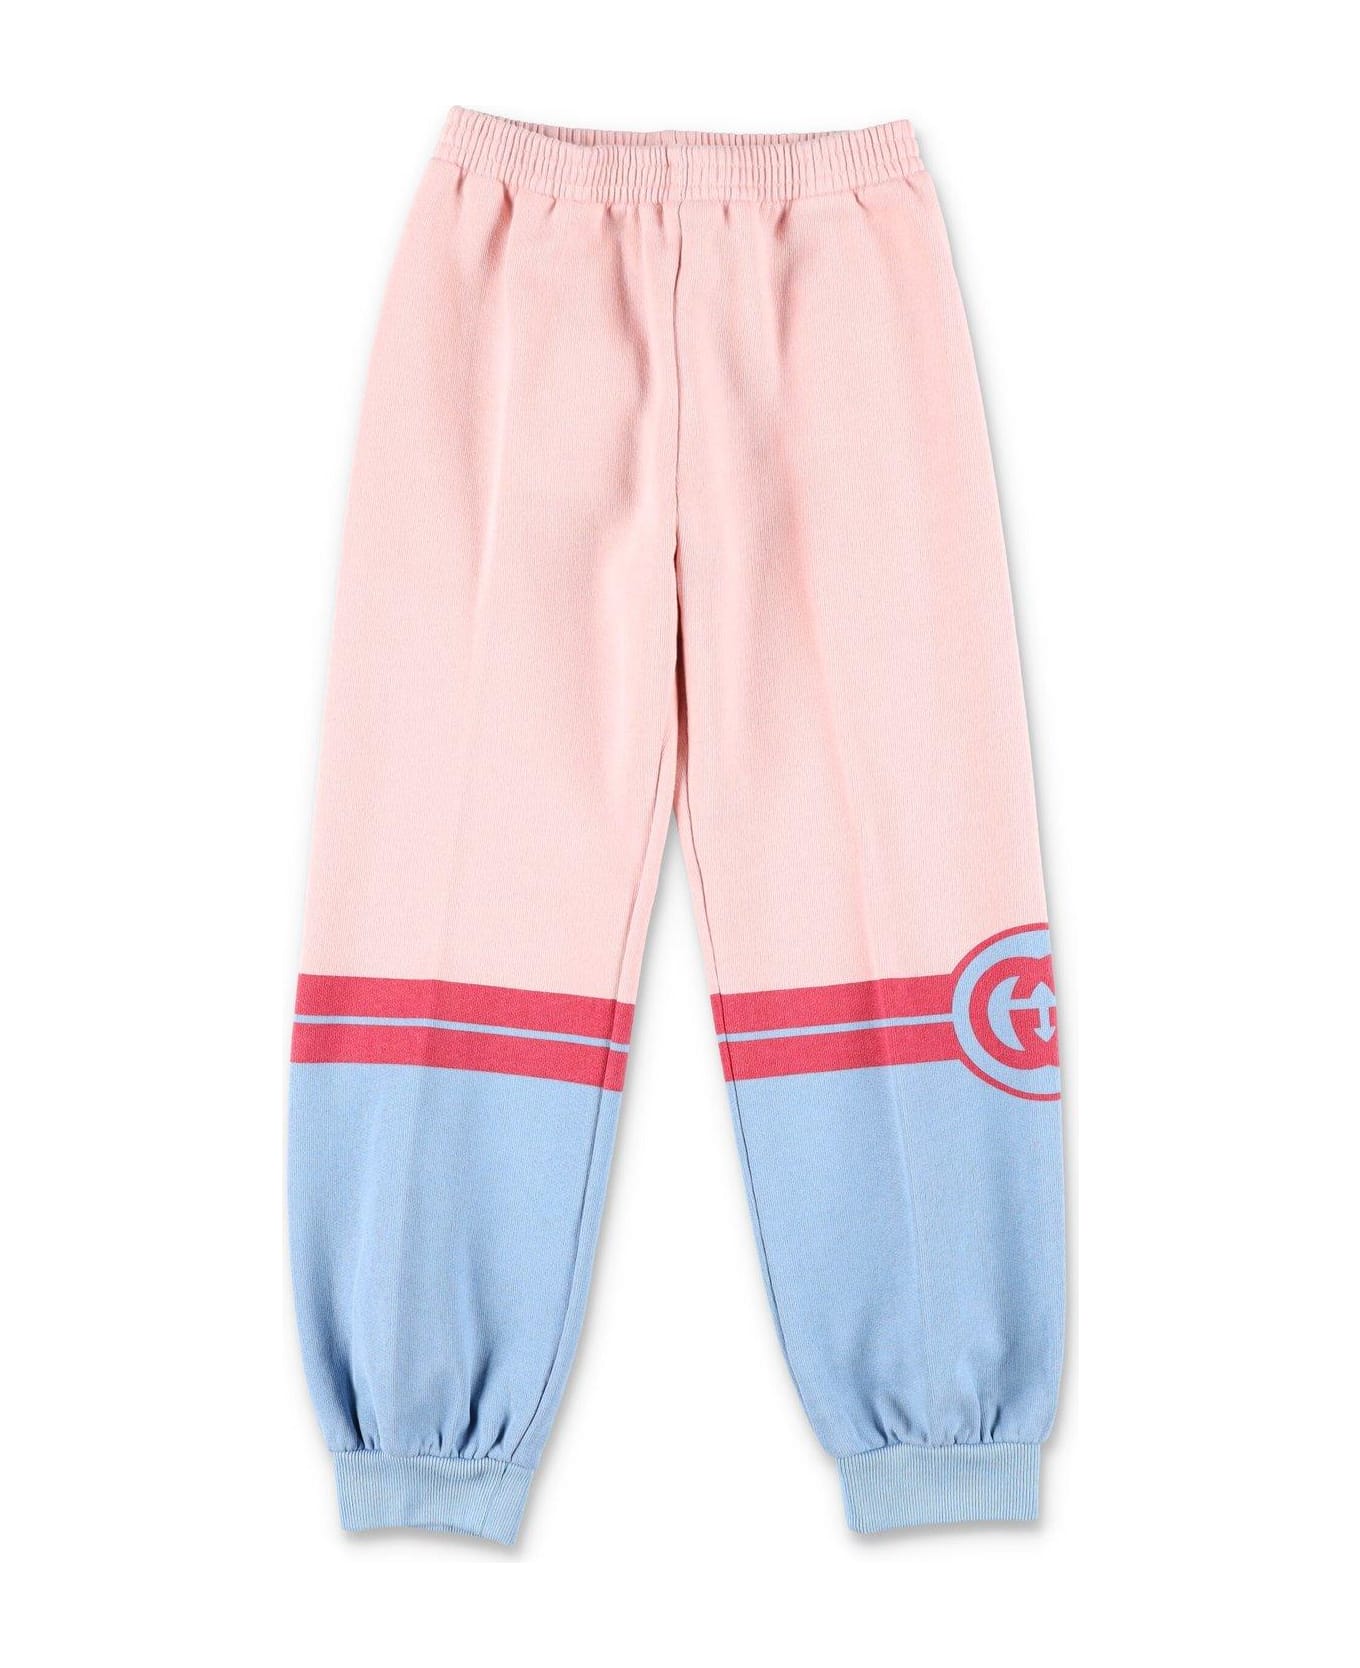 Gucci Interlocking G Printed Jersey Track Pants - Pink ボトムス